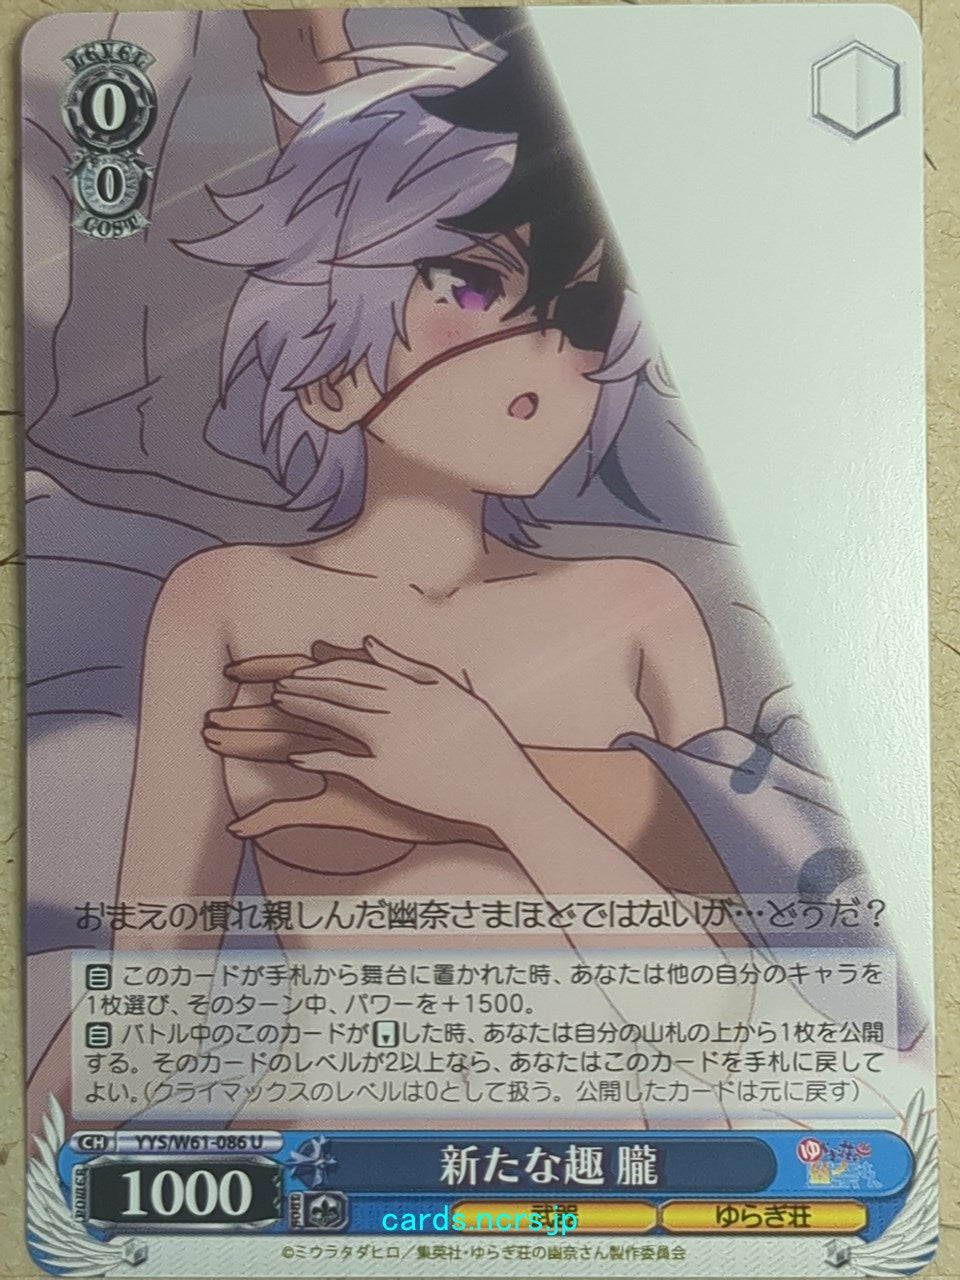 Weiss Schwarz Yuuna and the Haunted Hot Springs -Oboro Shinto-   Trading Card YYS/W61-086U